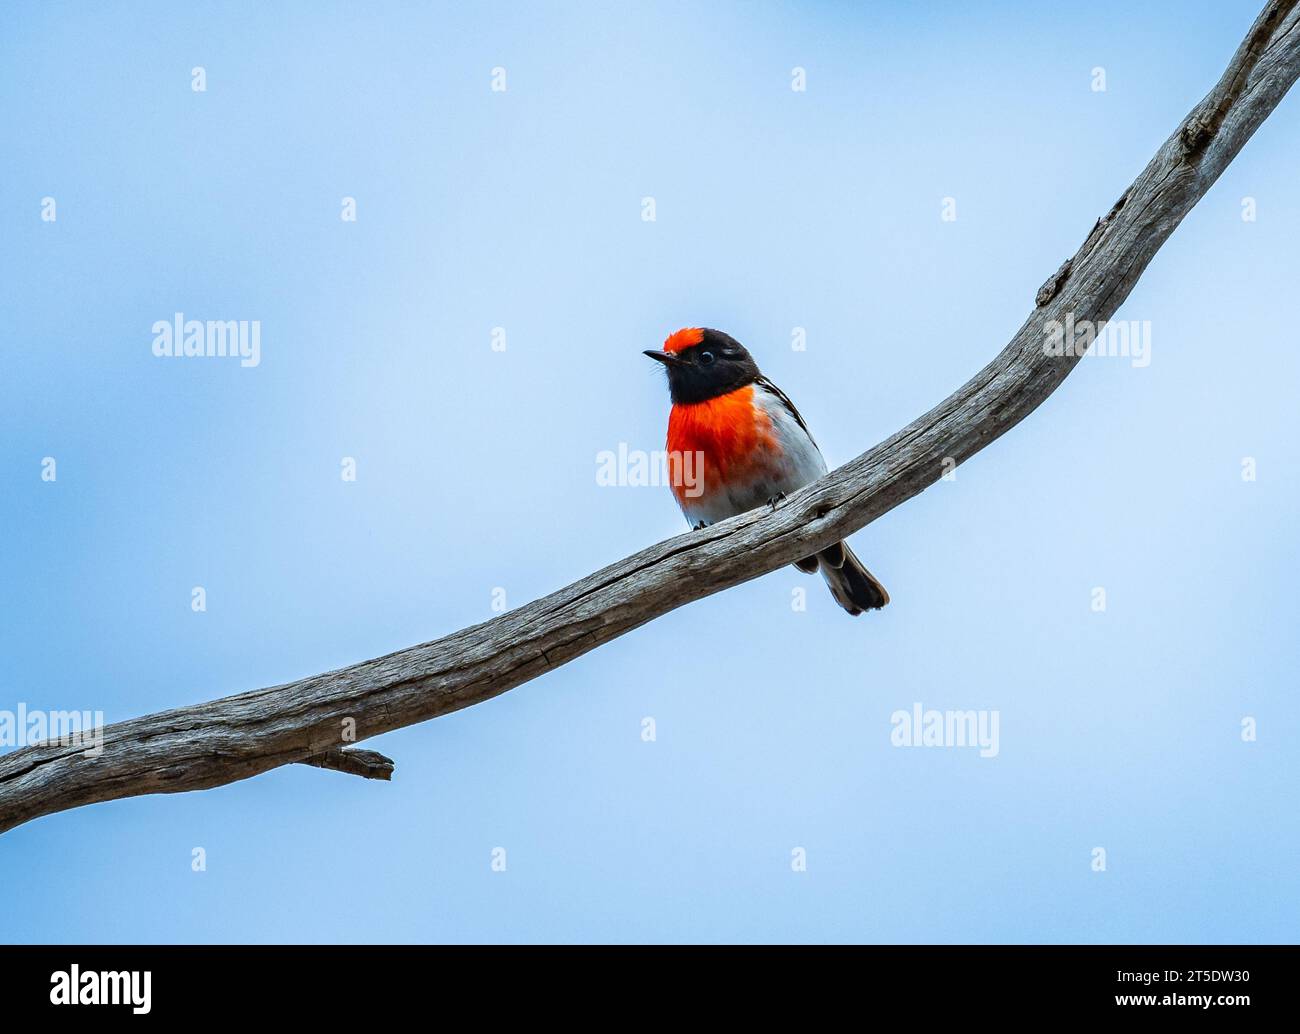 A bright-colored Red-capped Robin (Petroica goodenovii) perched on a branch. Australia. Stock Photo